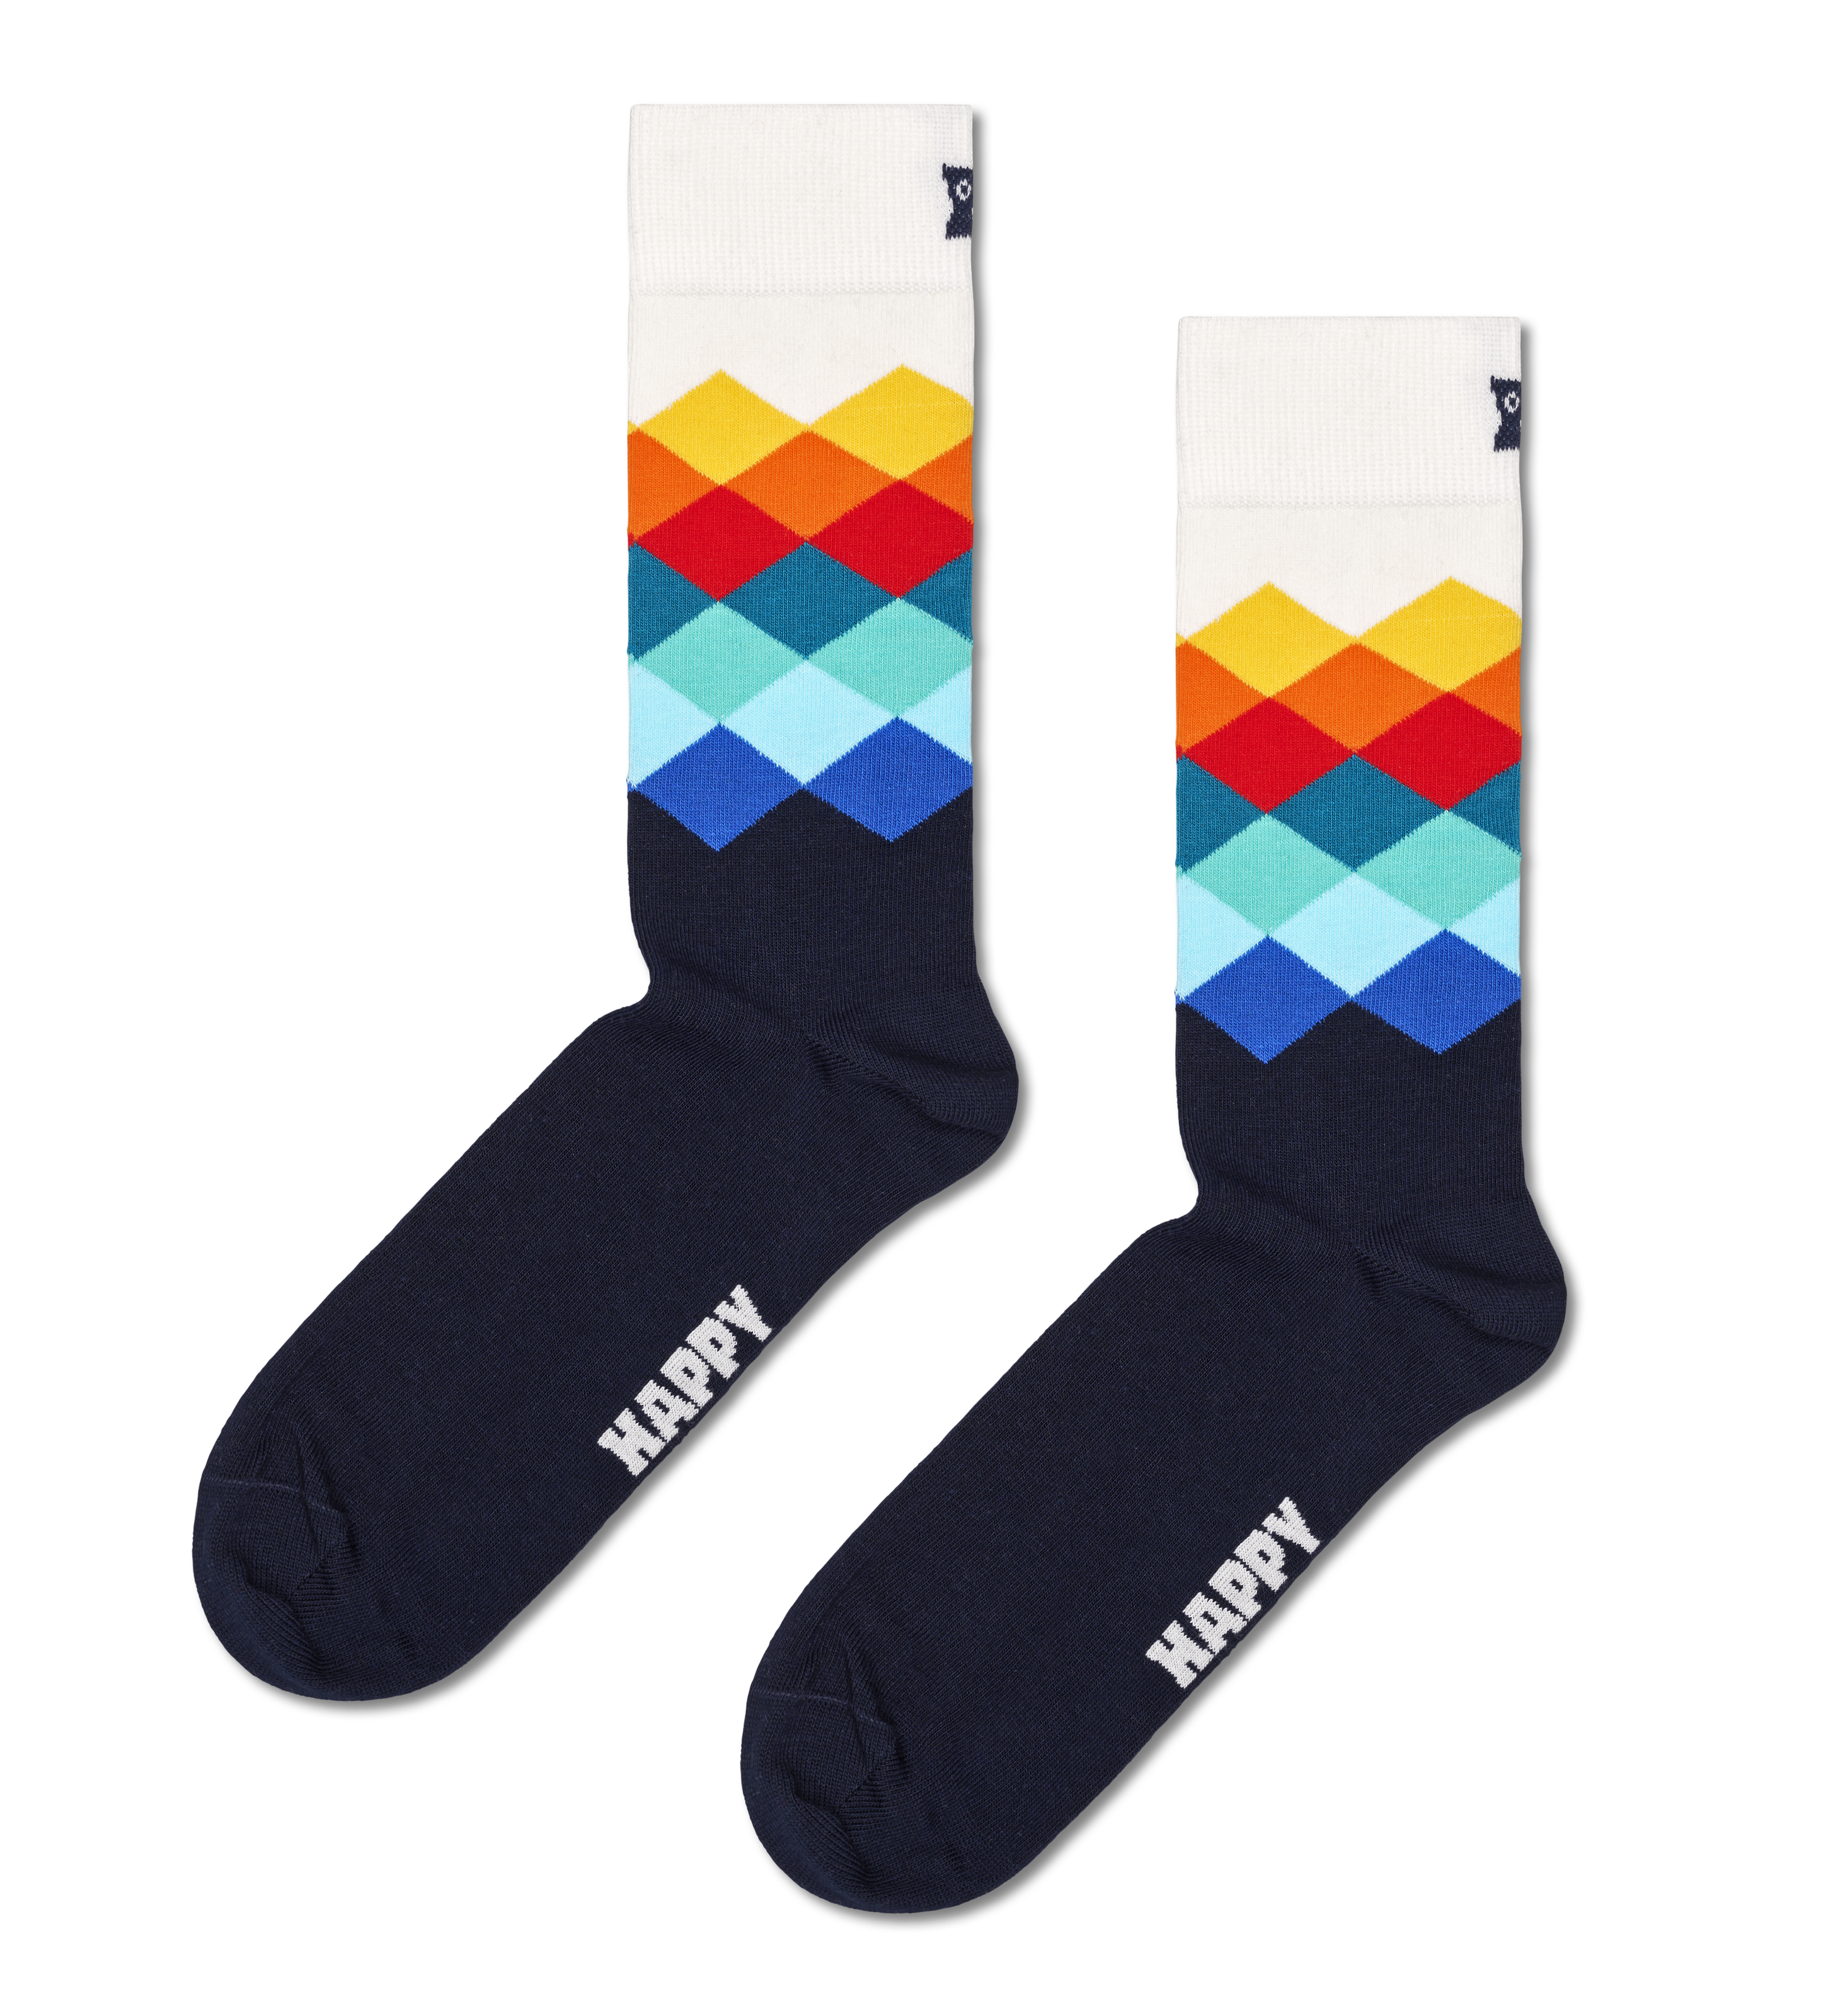 US Socks Crew | Socks Happy 4-Pack Navy Set Multi-Color Gift